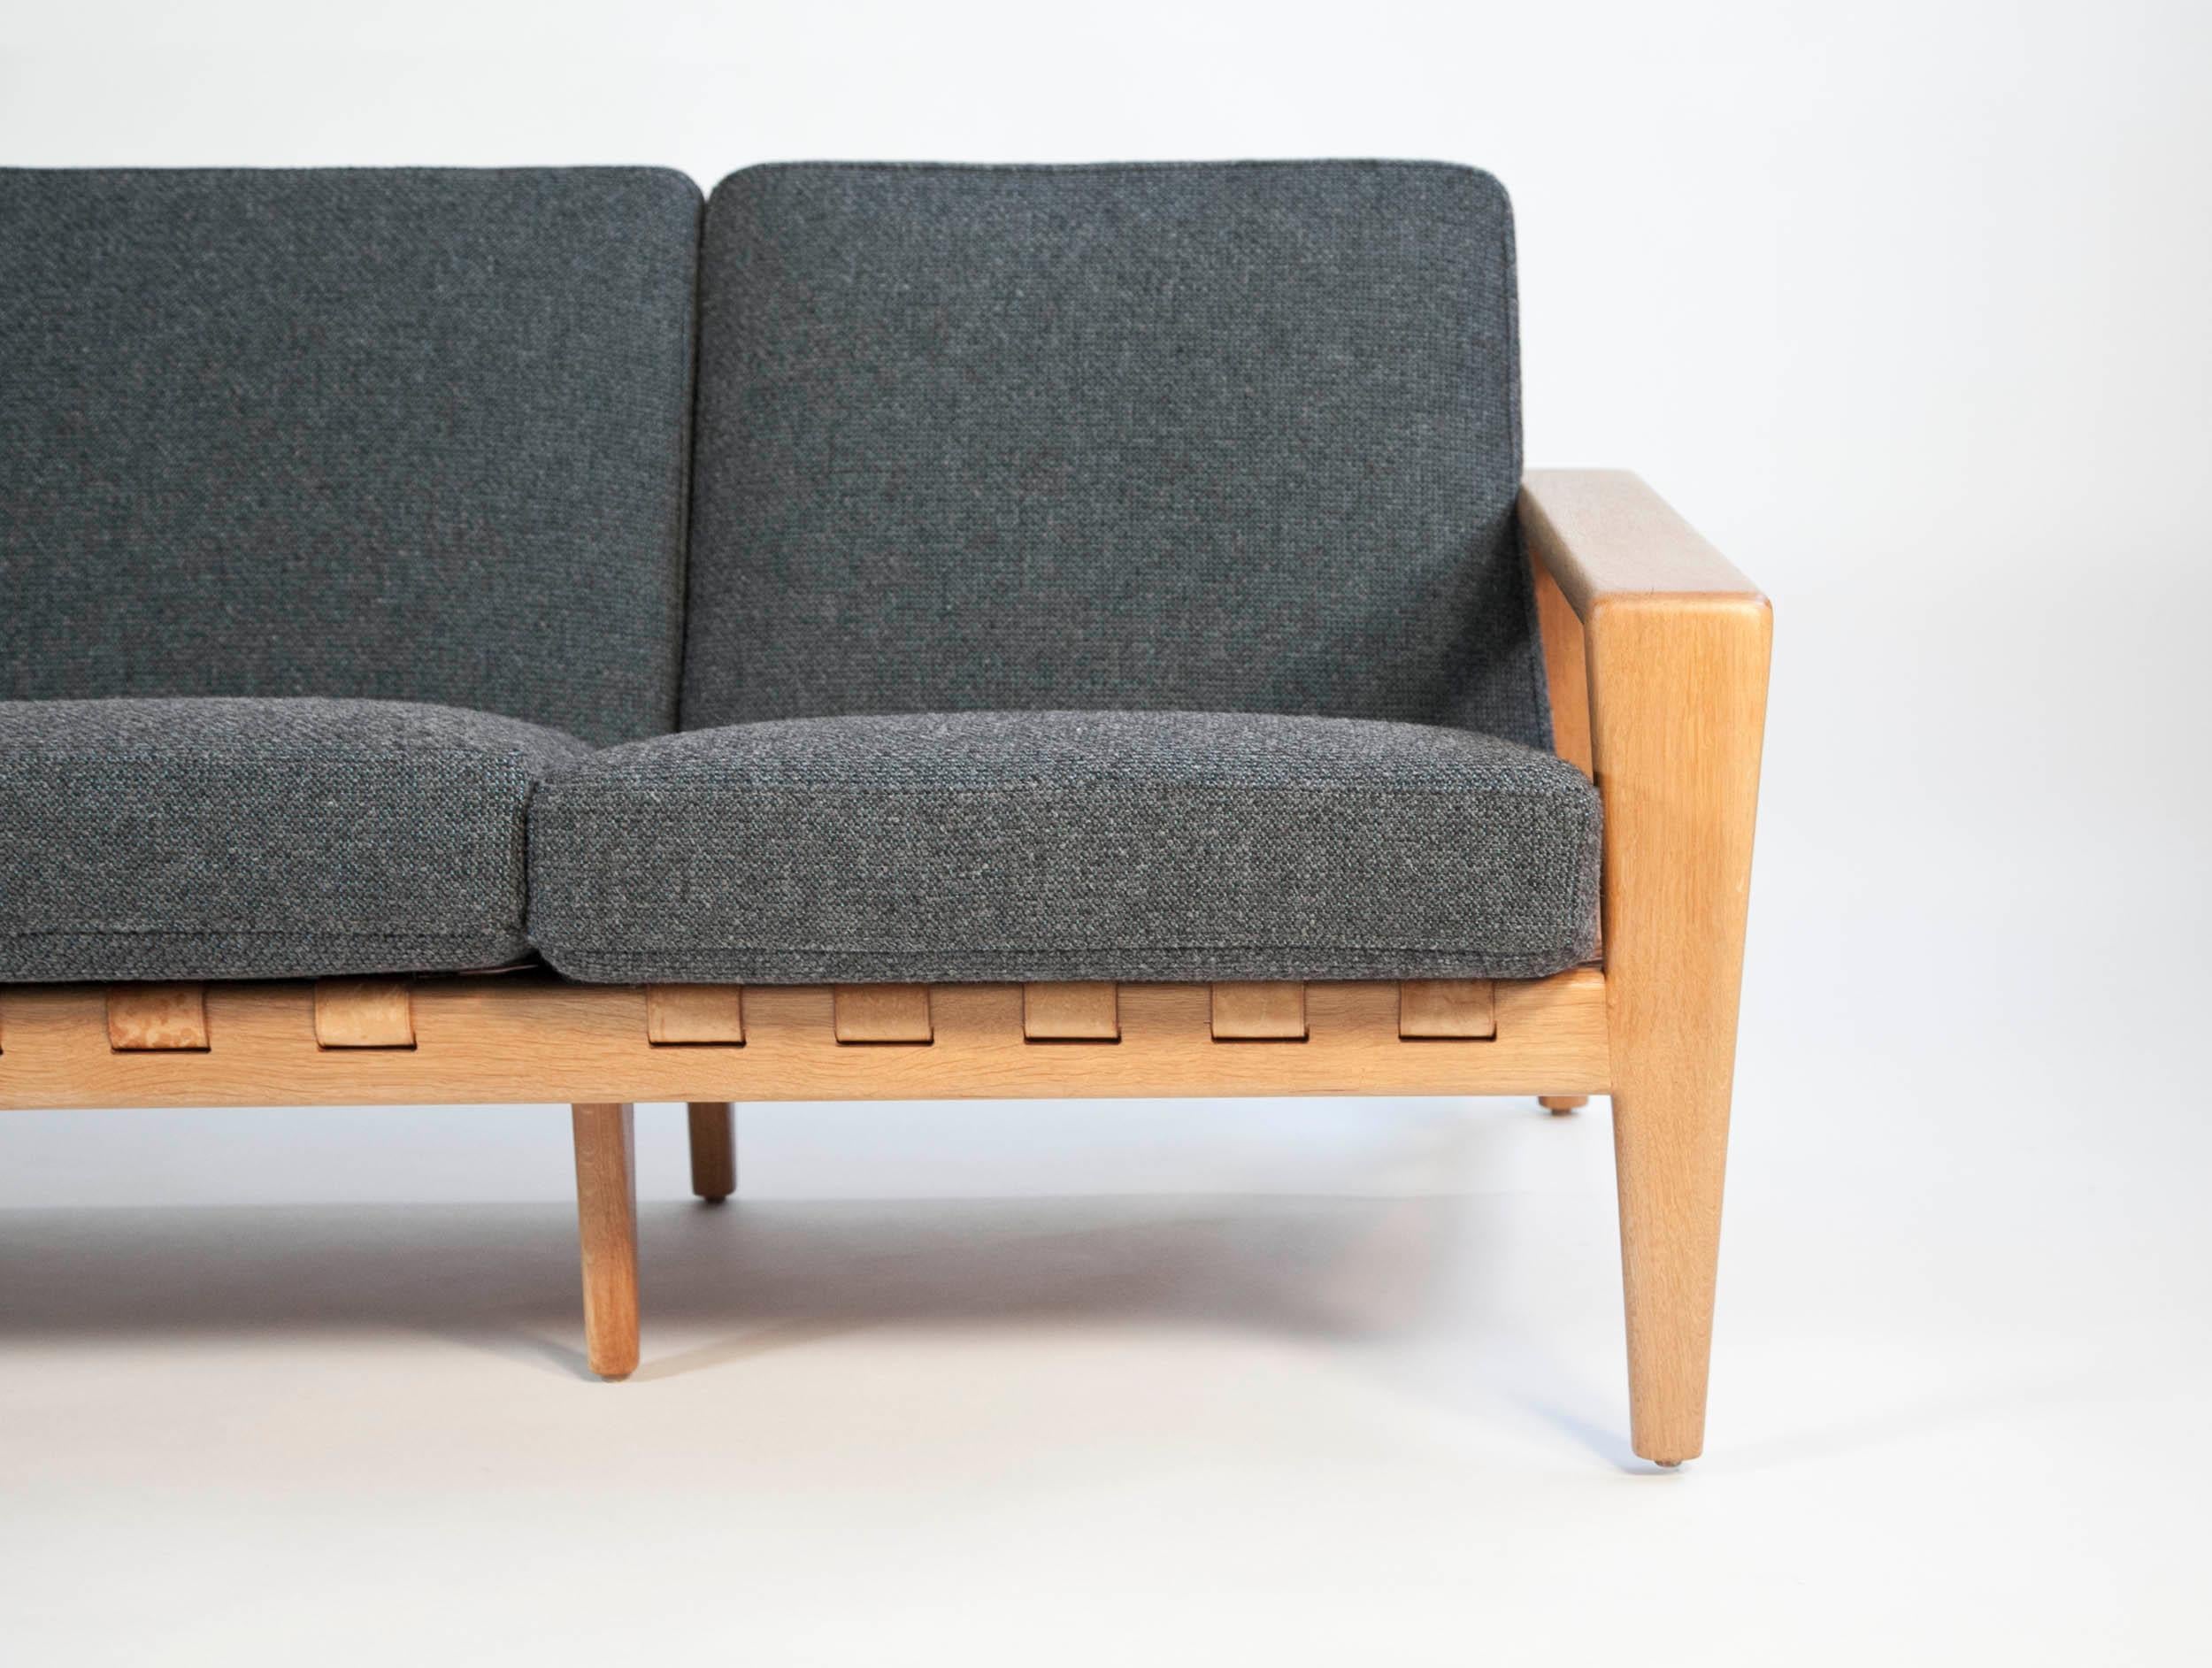 20th Century Svante Skogh Four-Seat Bodö Sofa by Seffle Möbelfabrik in Sweden, 1960s For Sale